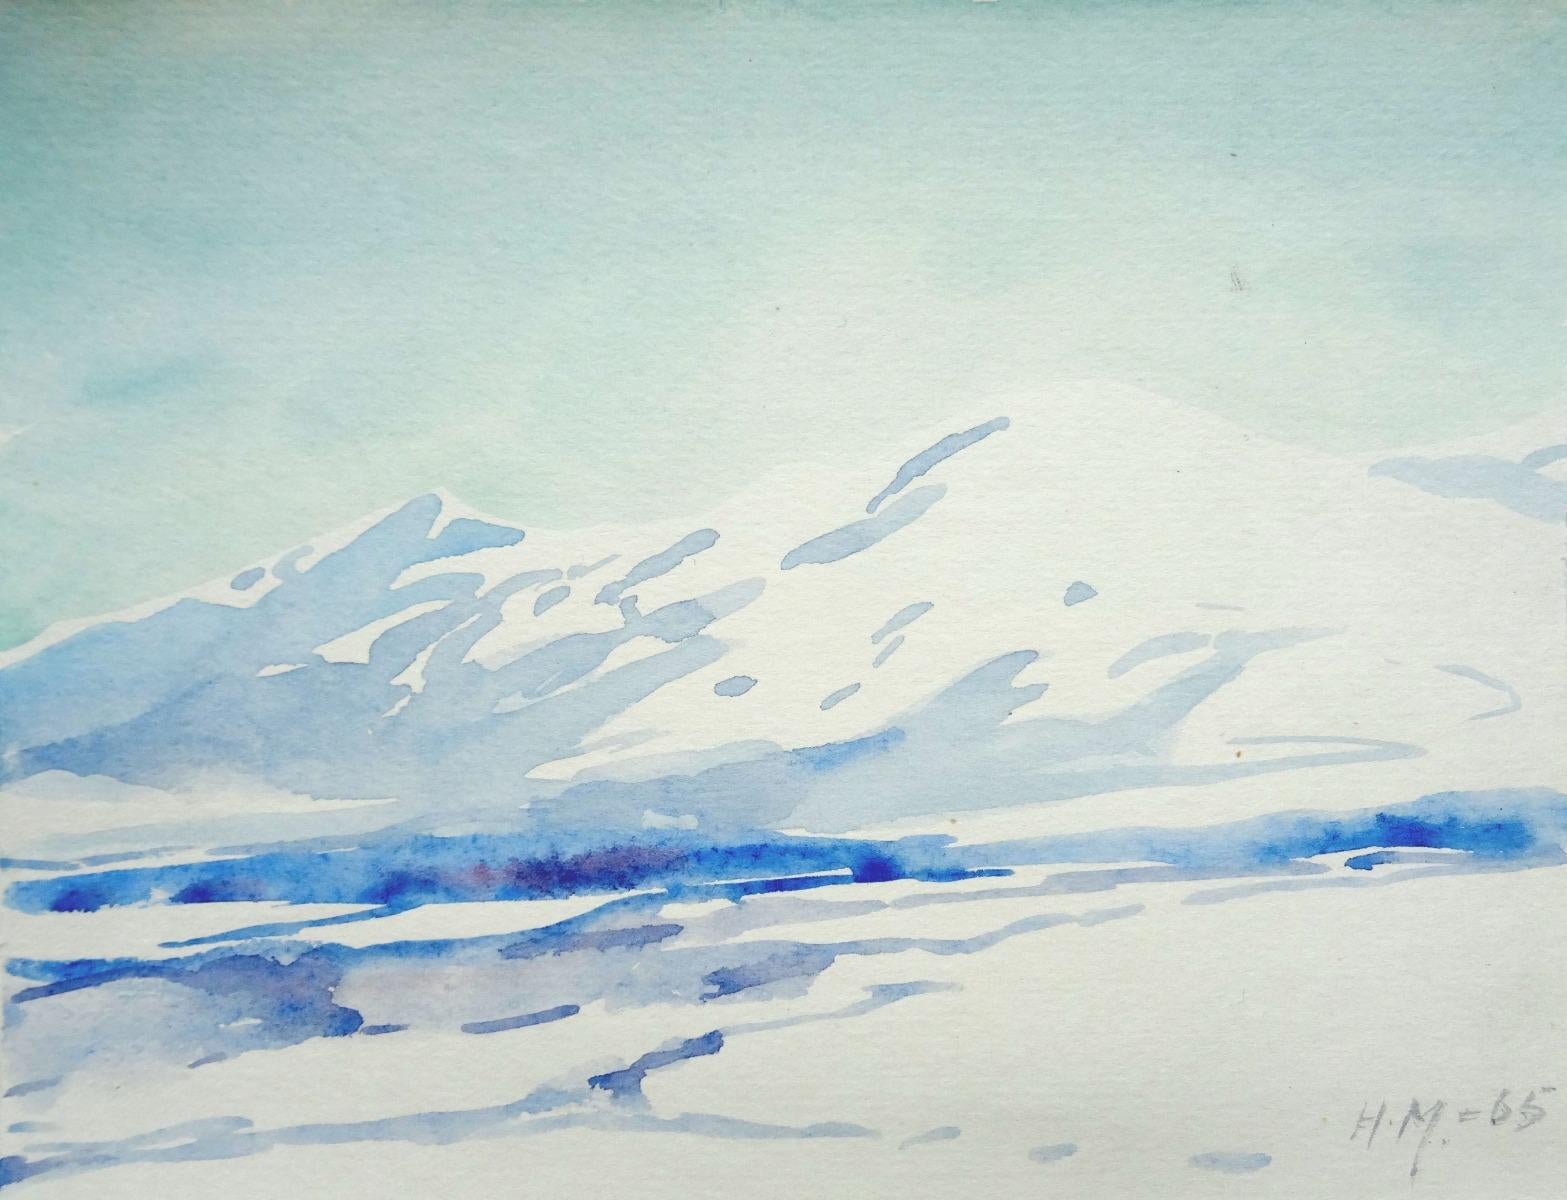 Ice breaker  1965, paper/watercolor, 16x21 cm - Art by Herberts Mangolds